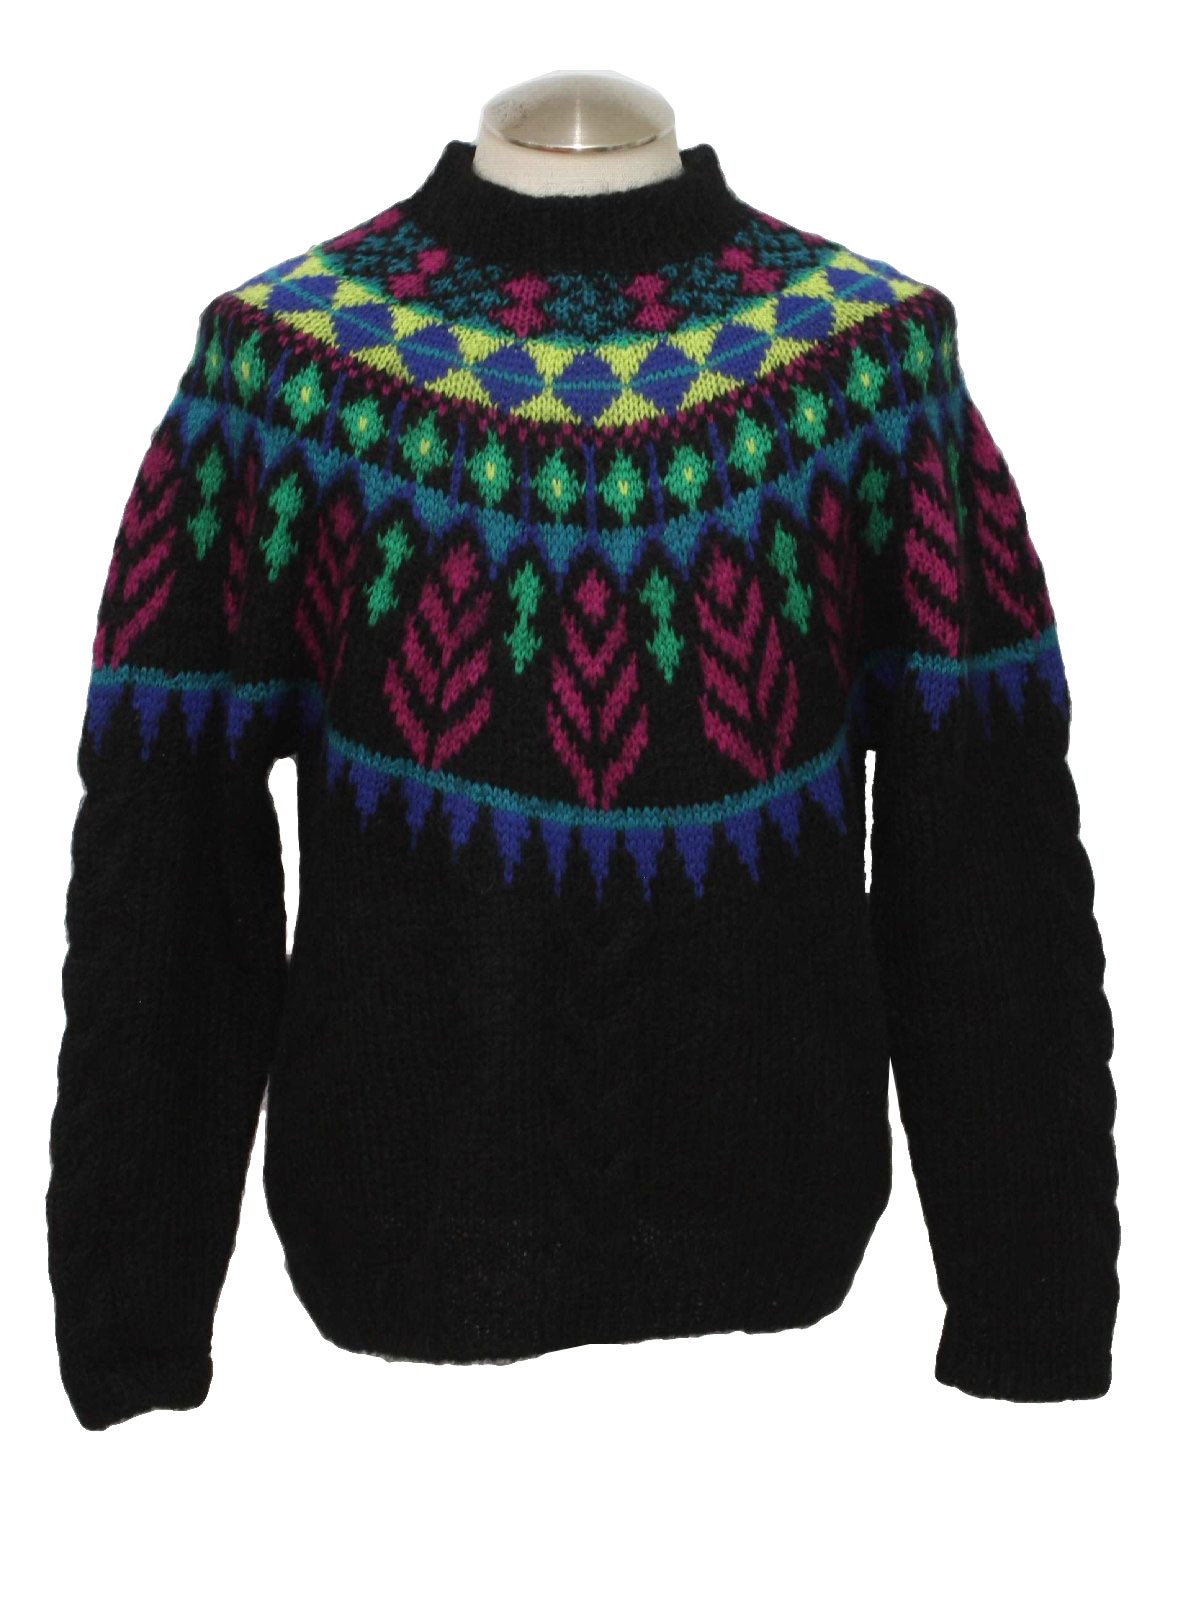 Retro 1980's Sweater (Forenza) : Late 80s -Forenza- Mens black, neon ...